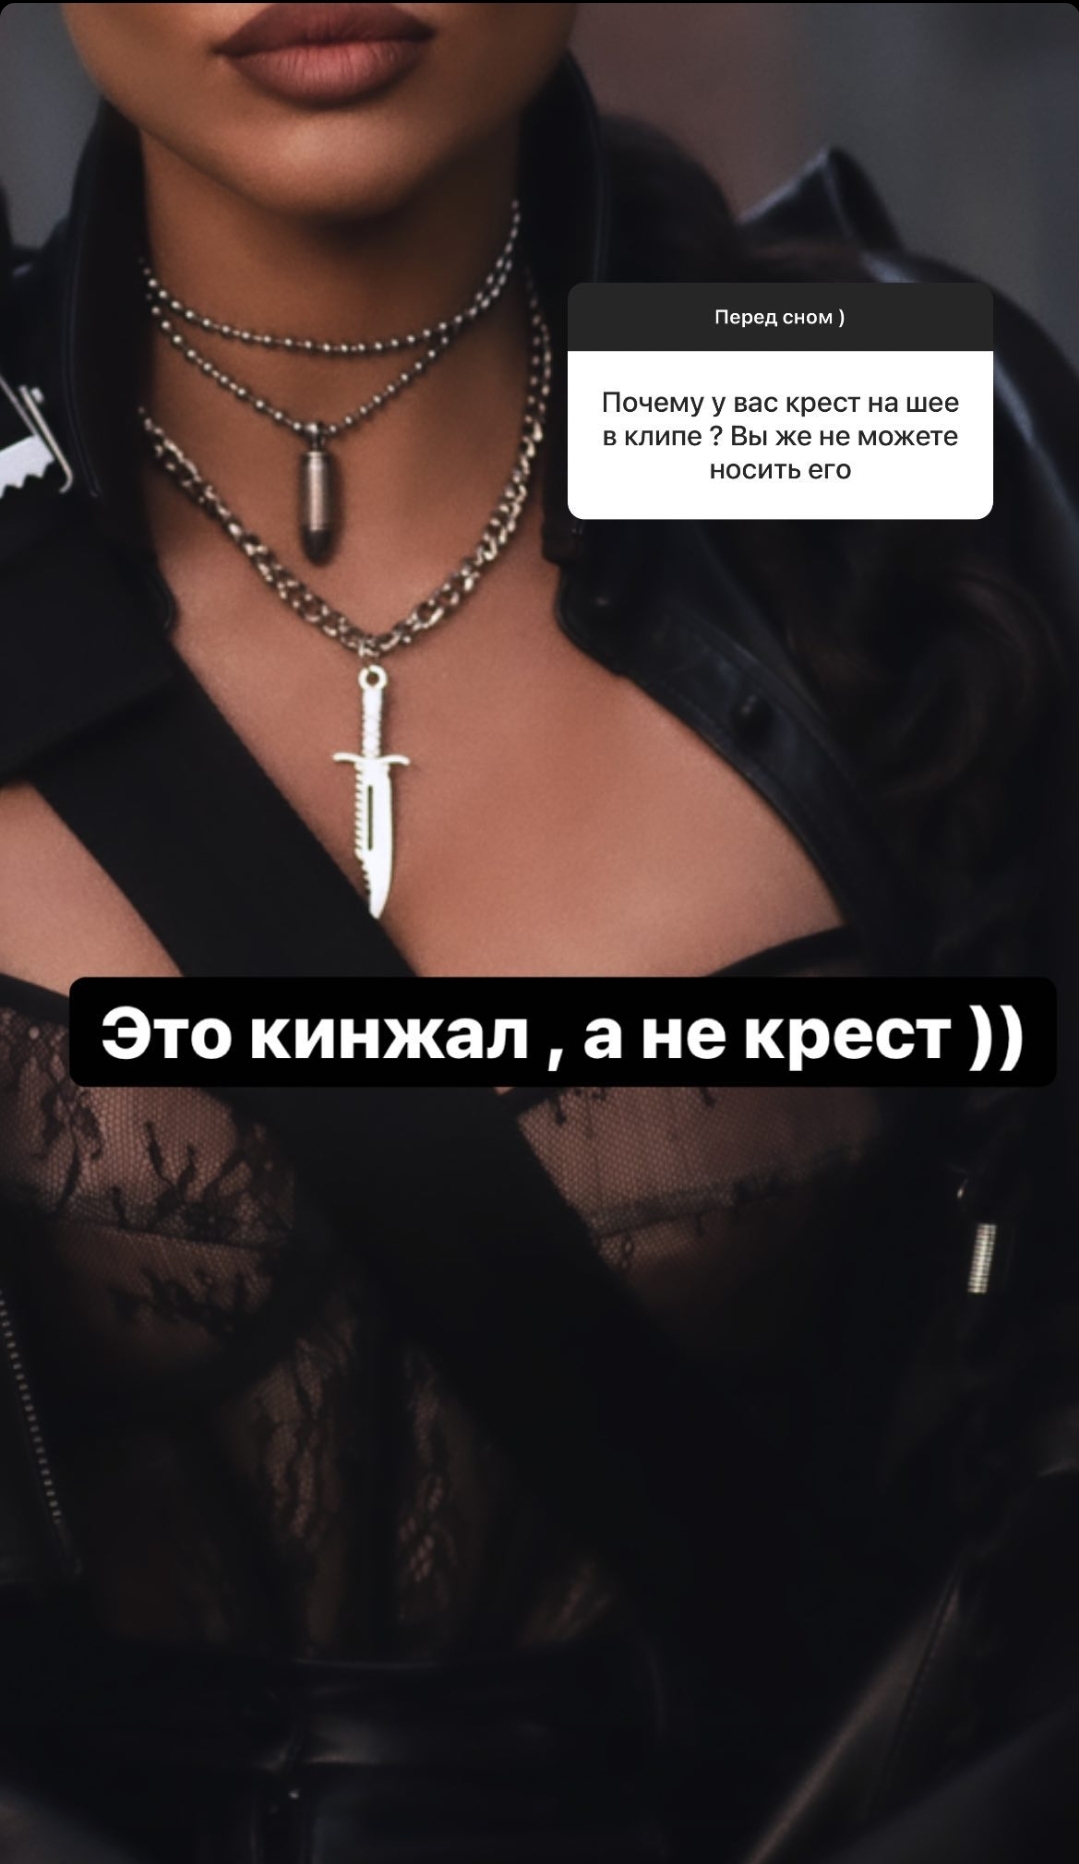 Анастасия Решетова снова попалась на лжи, благодаря Тимати